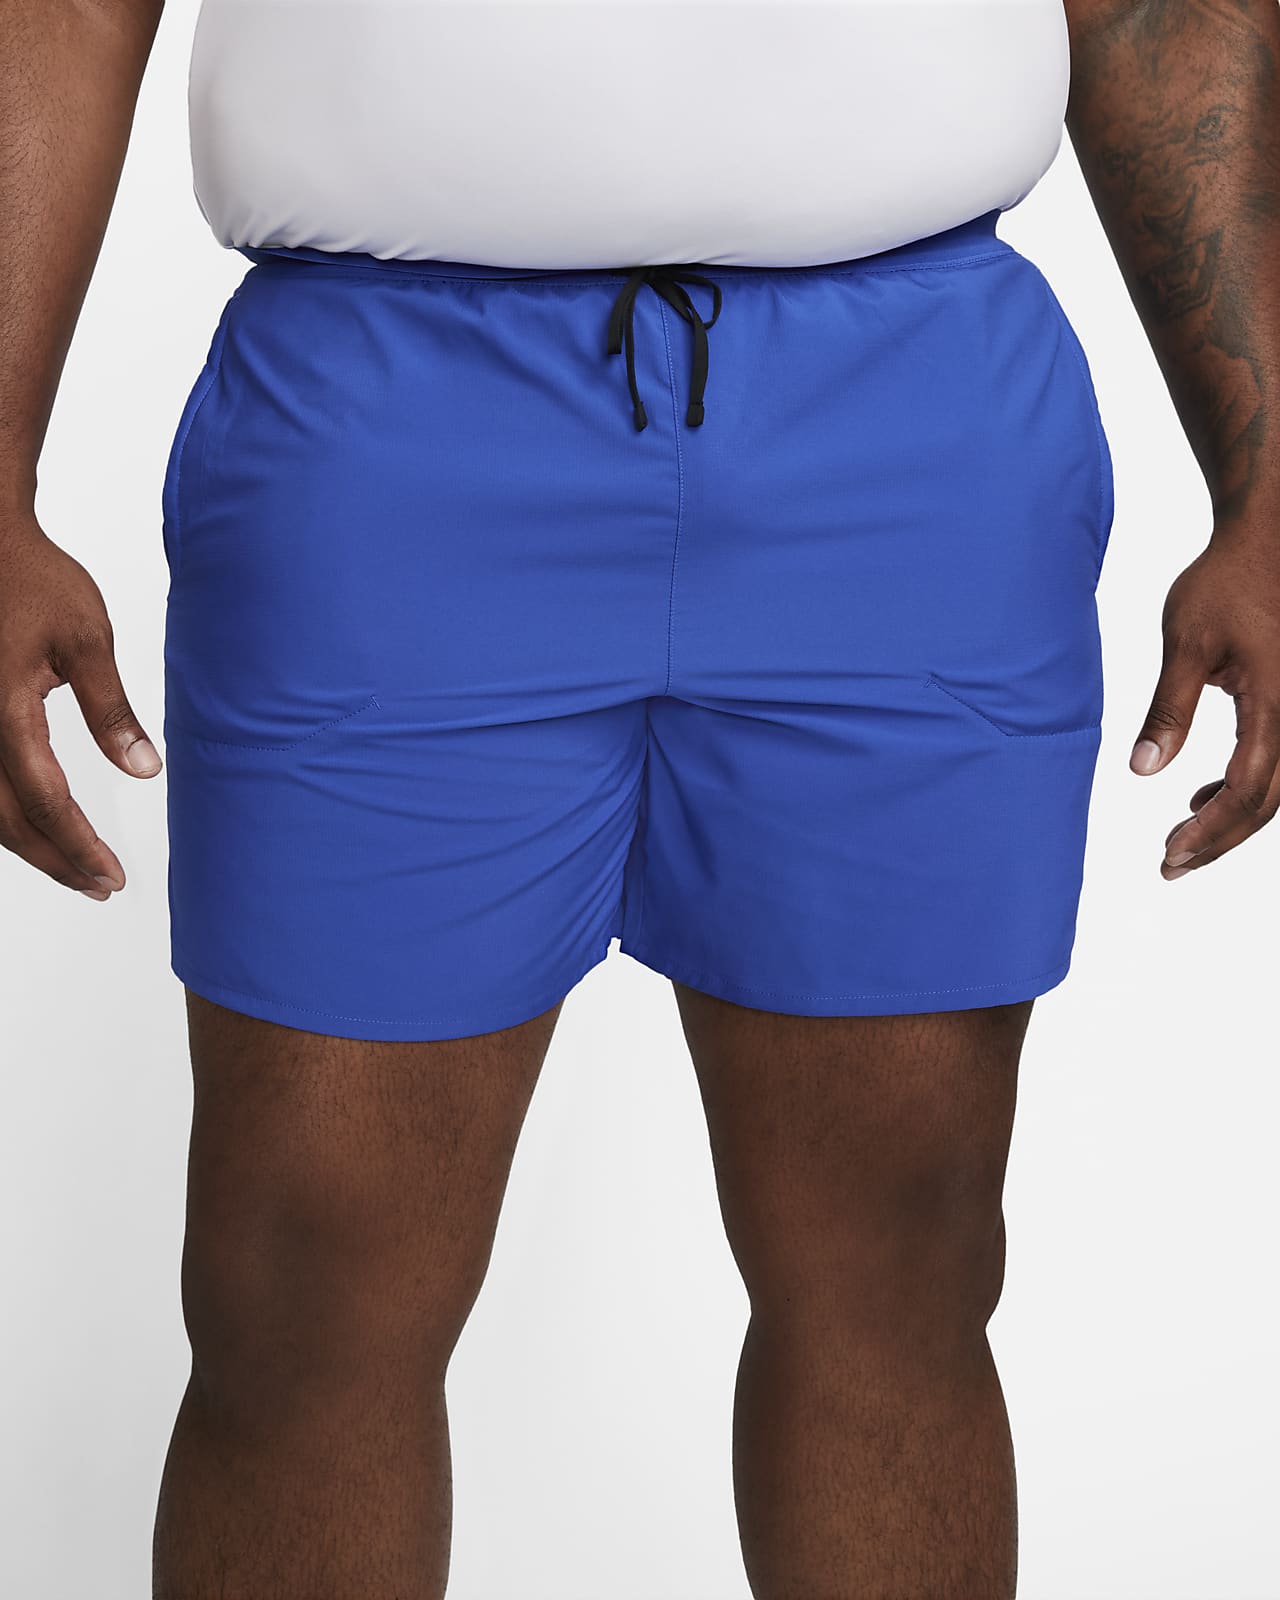 Shorts Nike np dynamic fit 3qt tight - Nike - Brands - Handball wear